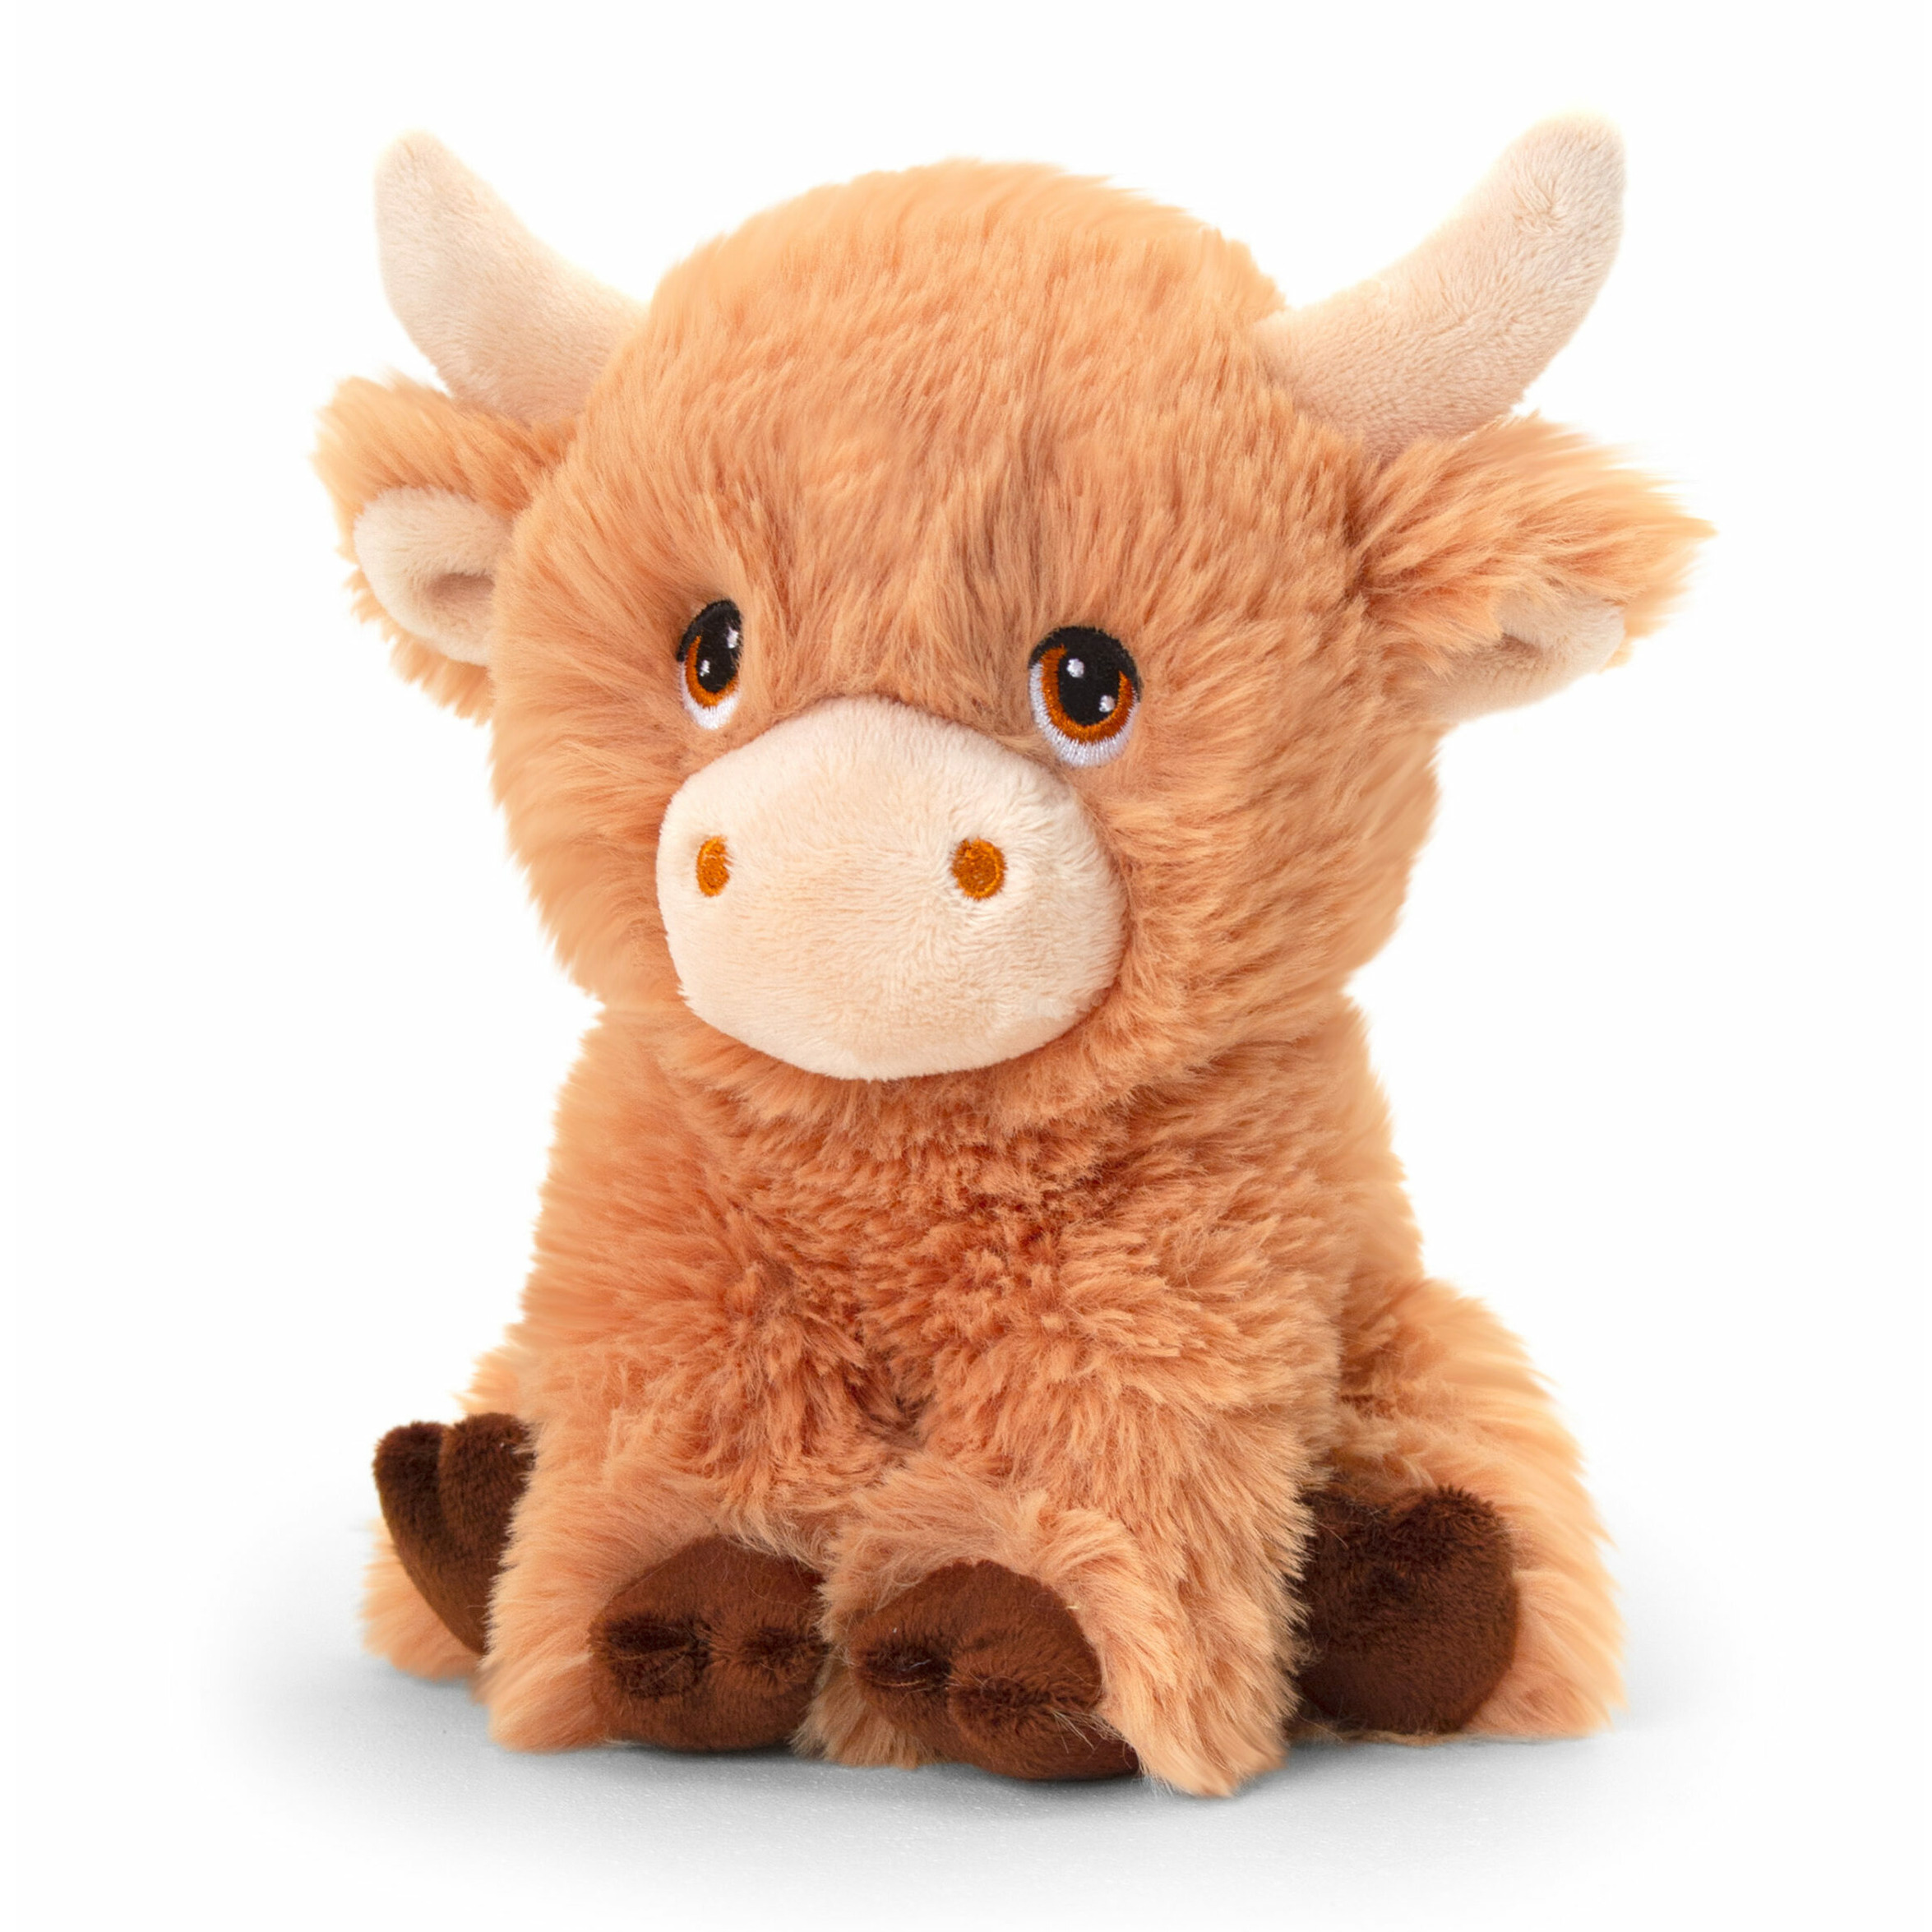 Keel Toys pluche koe met hoorns knuffeldier - bruin - zittend - 25 cm -